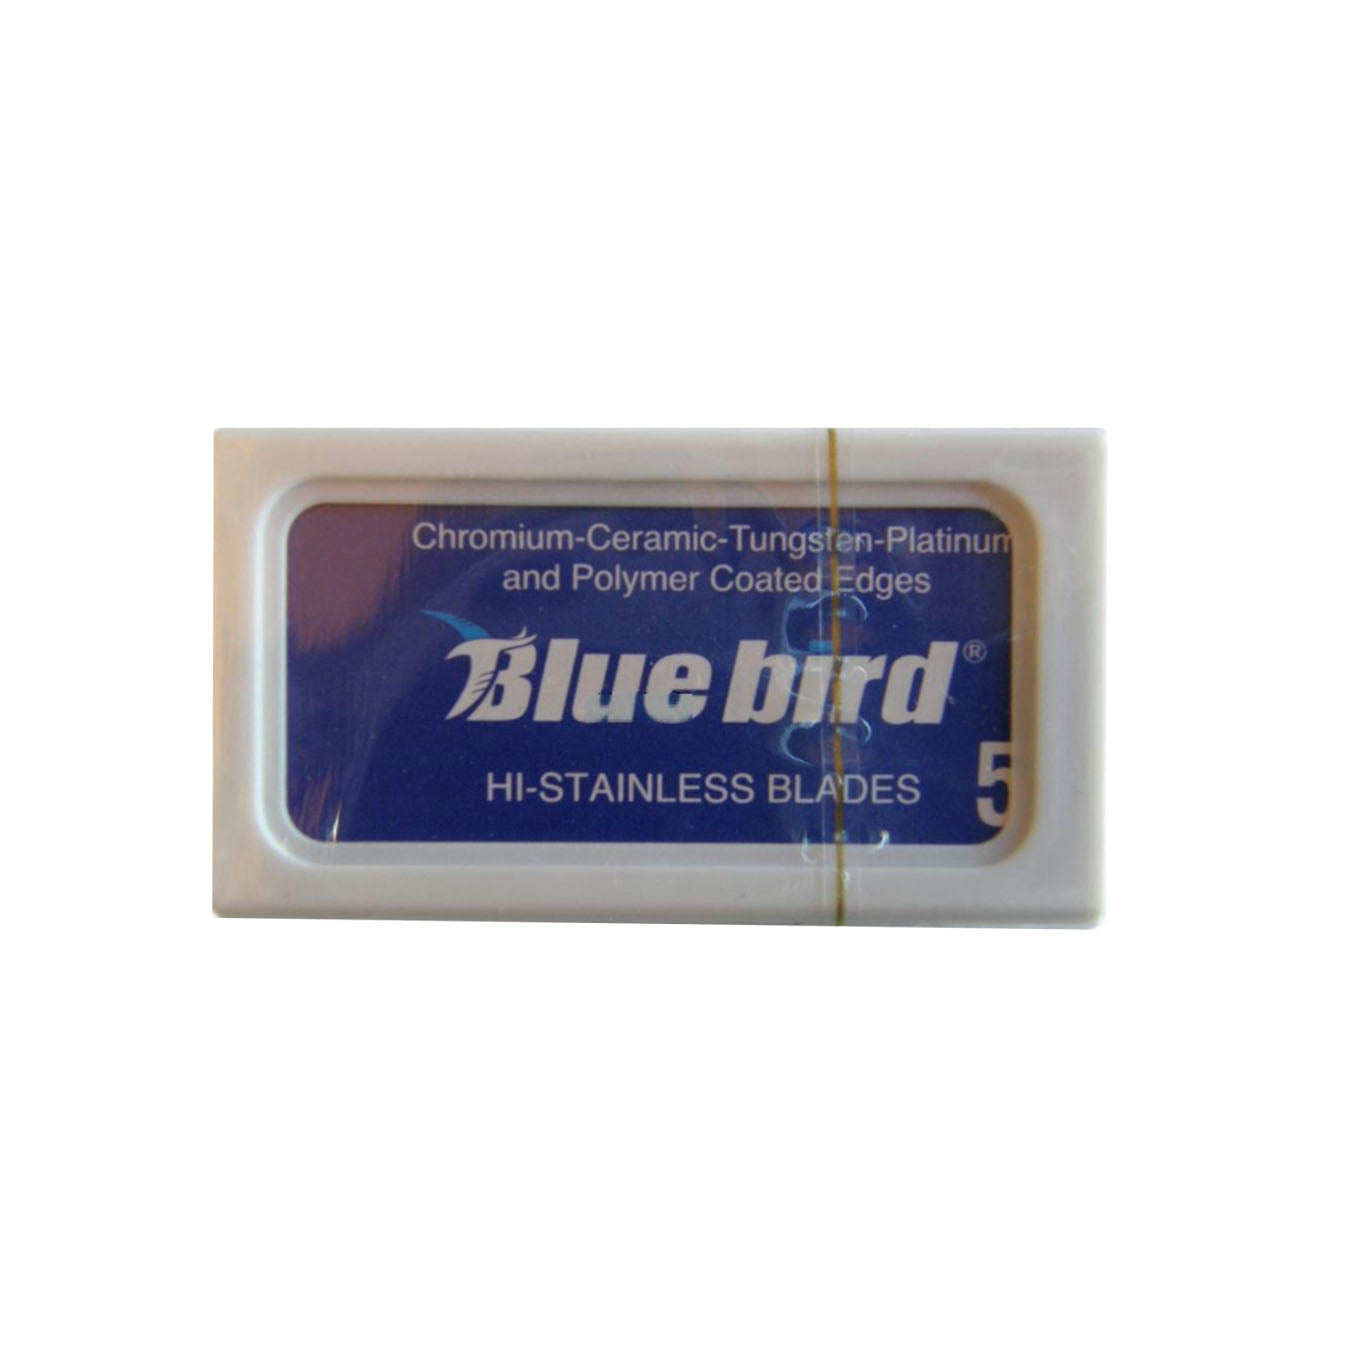 Blue Bird Hi-Stainless Double Edge Razor Blades - 5 blades